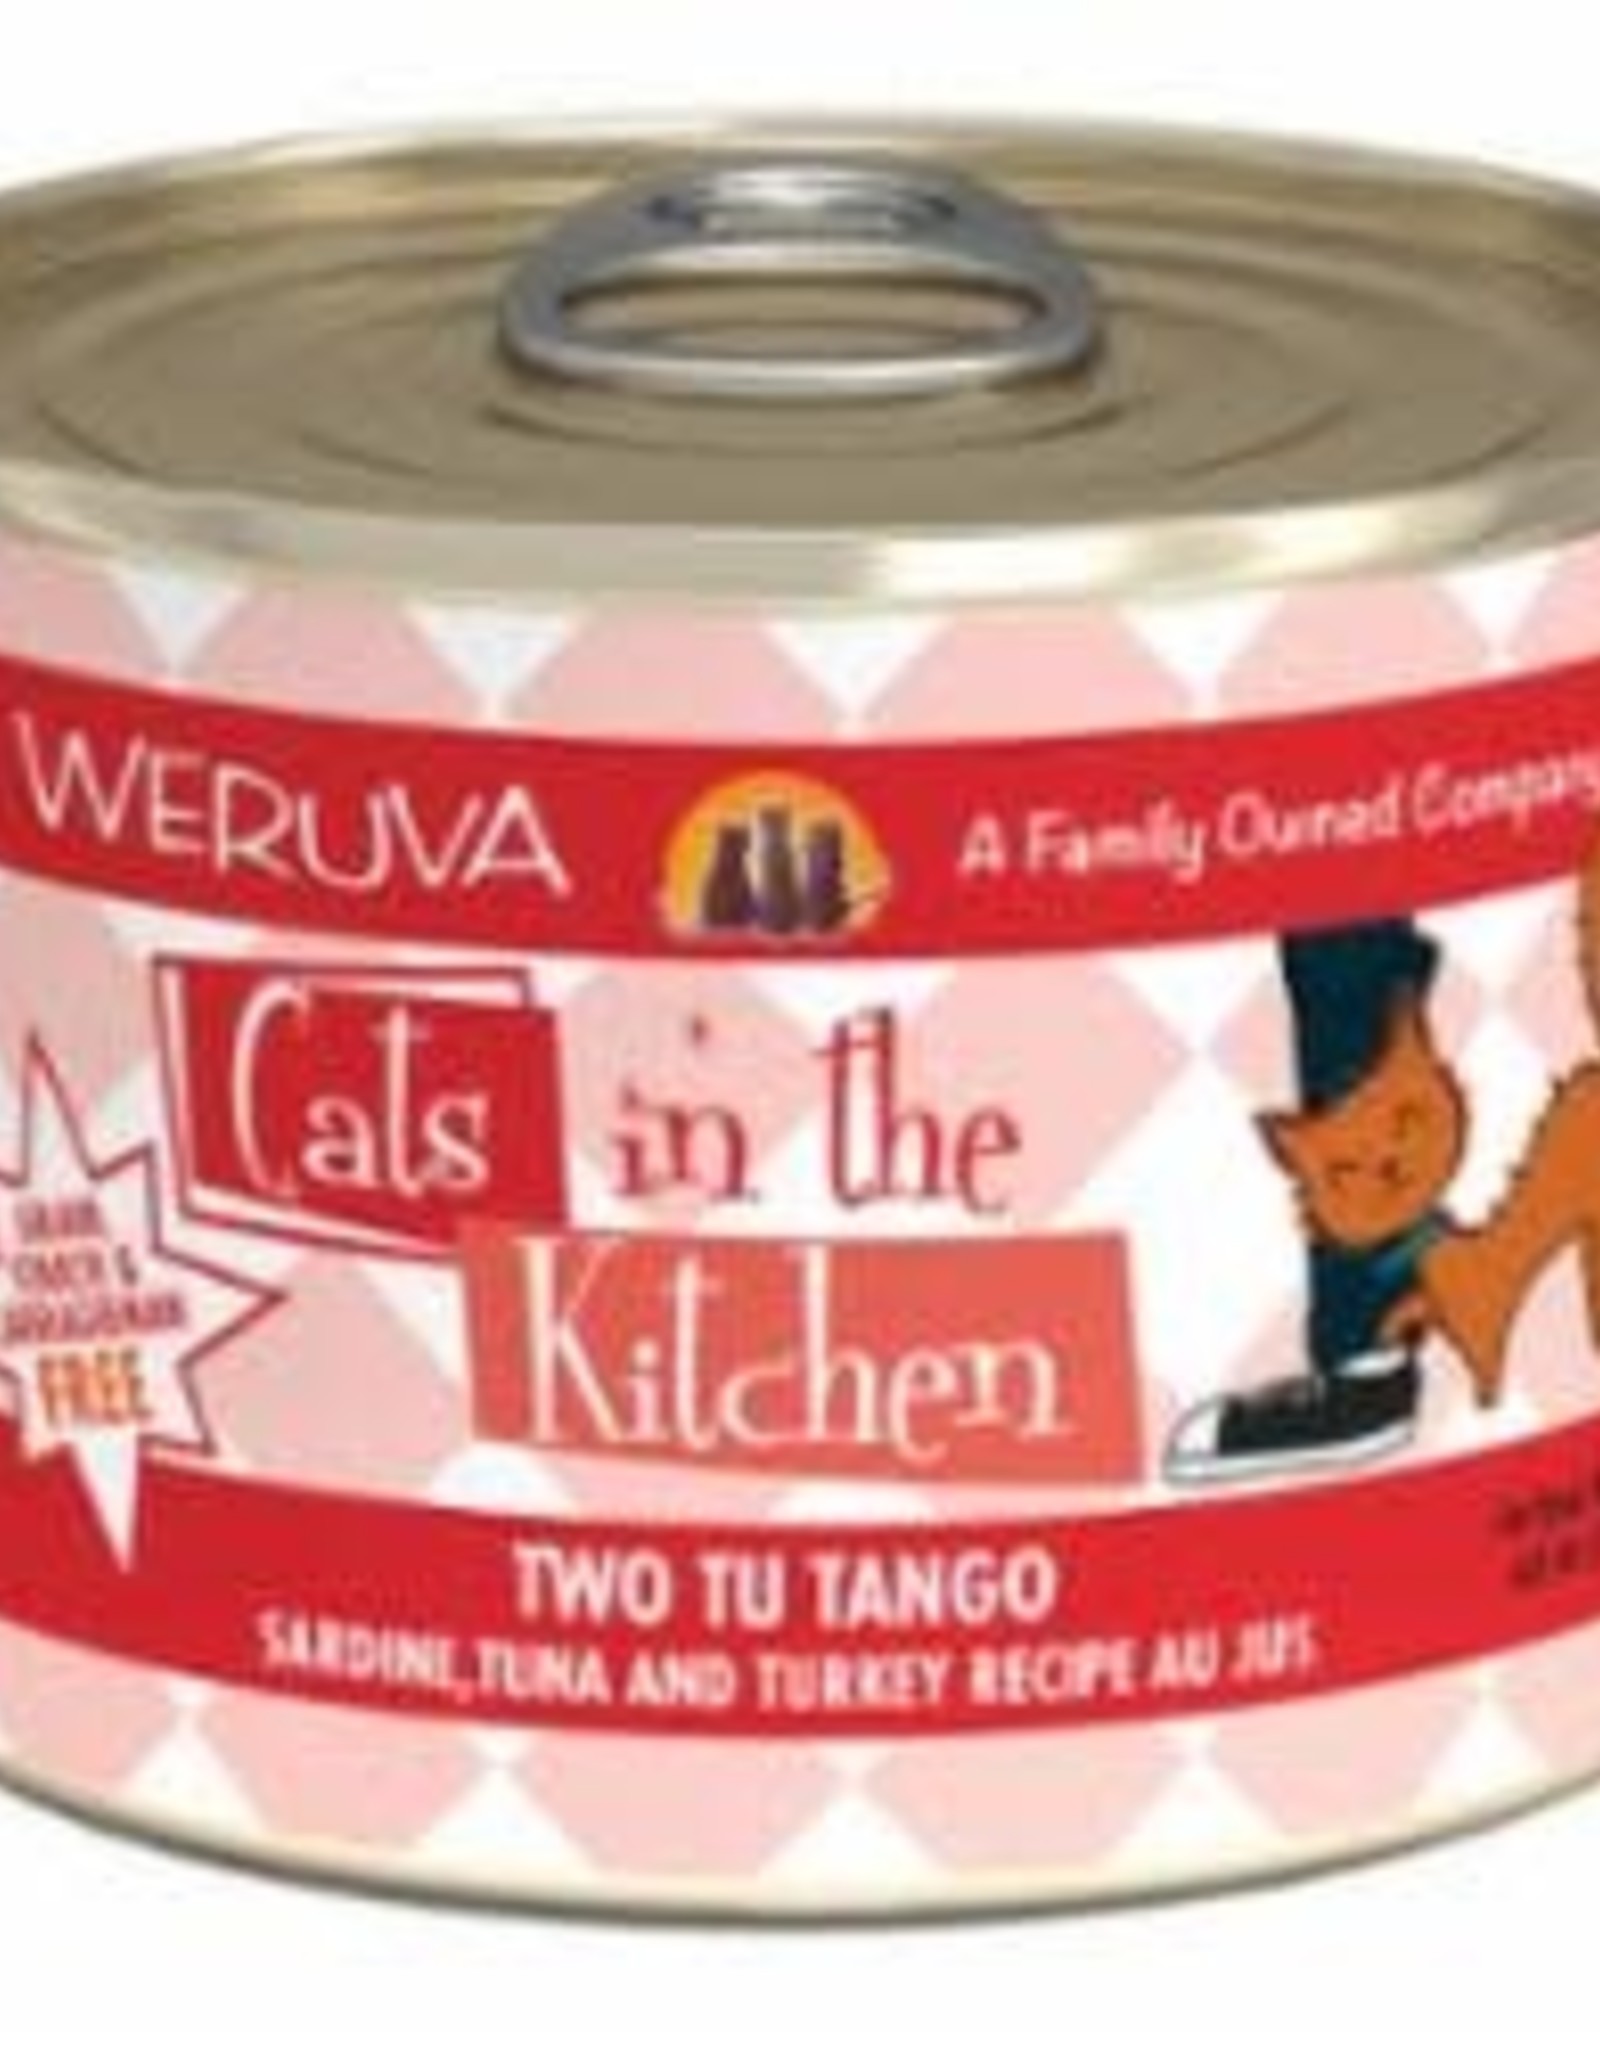 Weruva Weruva Cats In The Kitchen Grain Free Two Tu Tango (Sardine, Tuna & Turkey) 6 oz